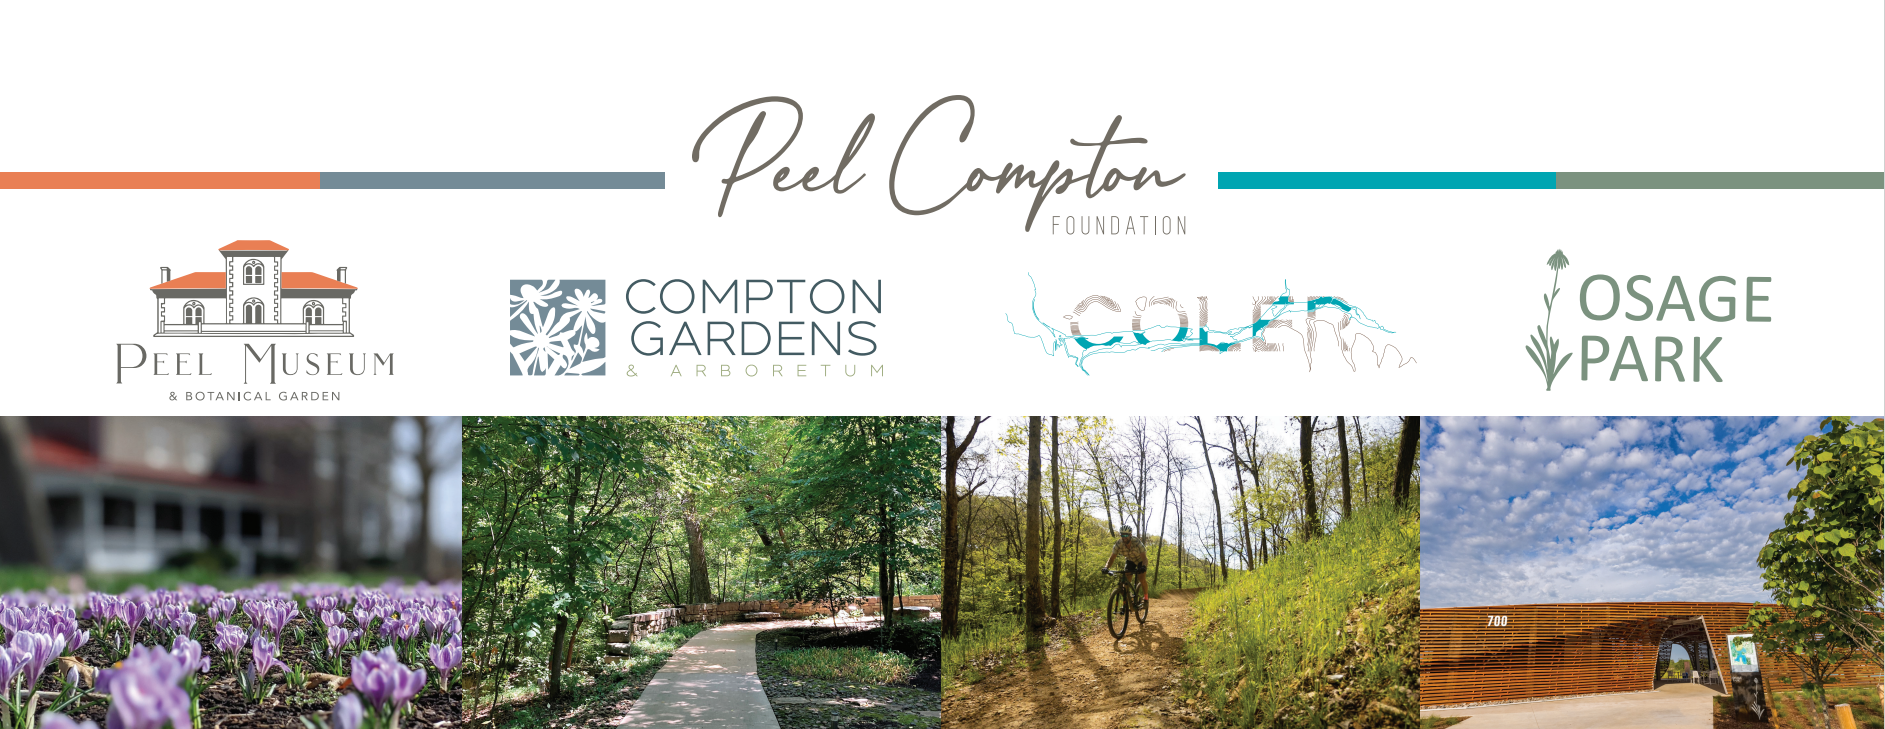 The Peel Compton Foundation